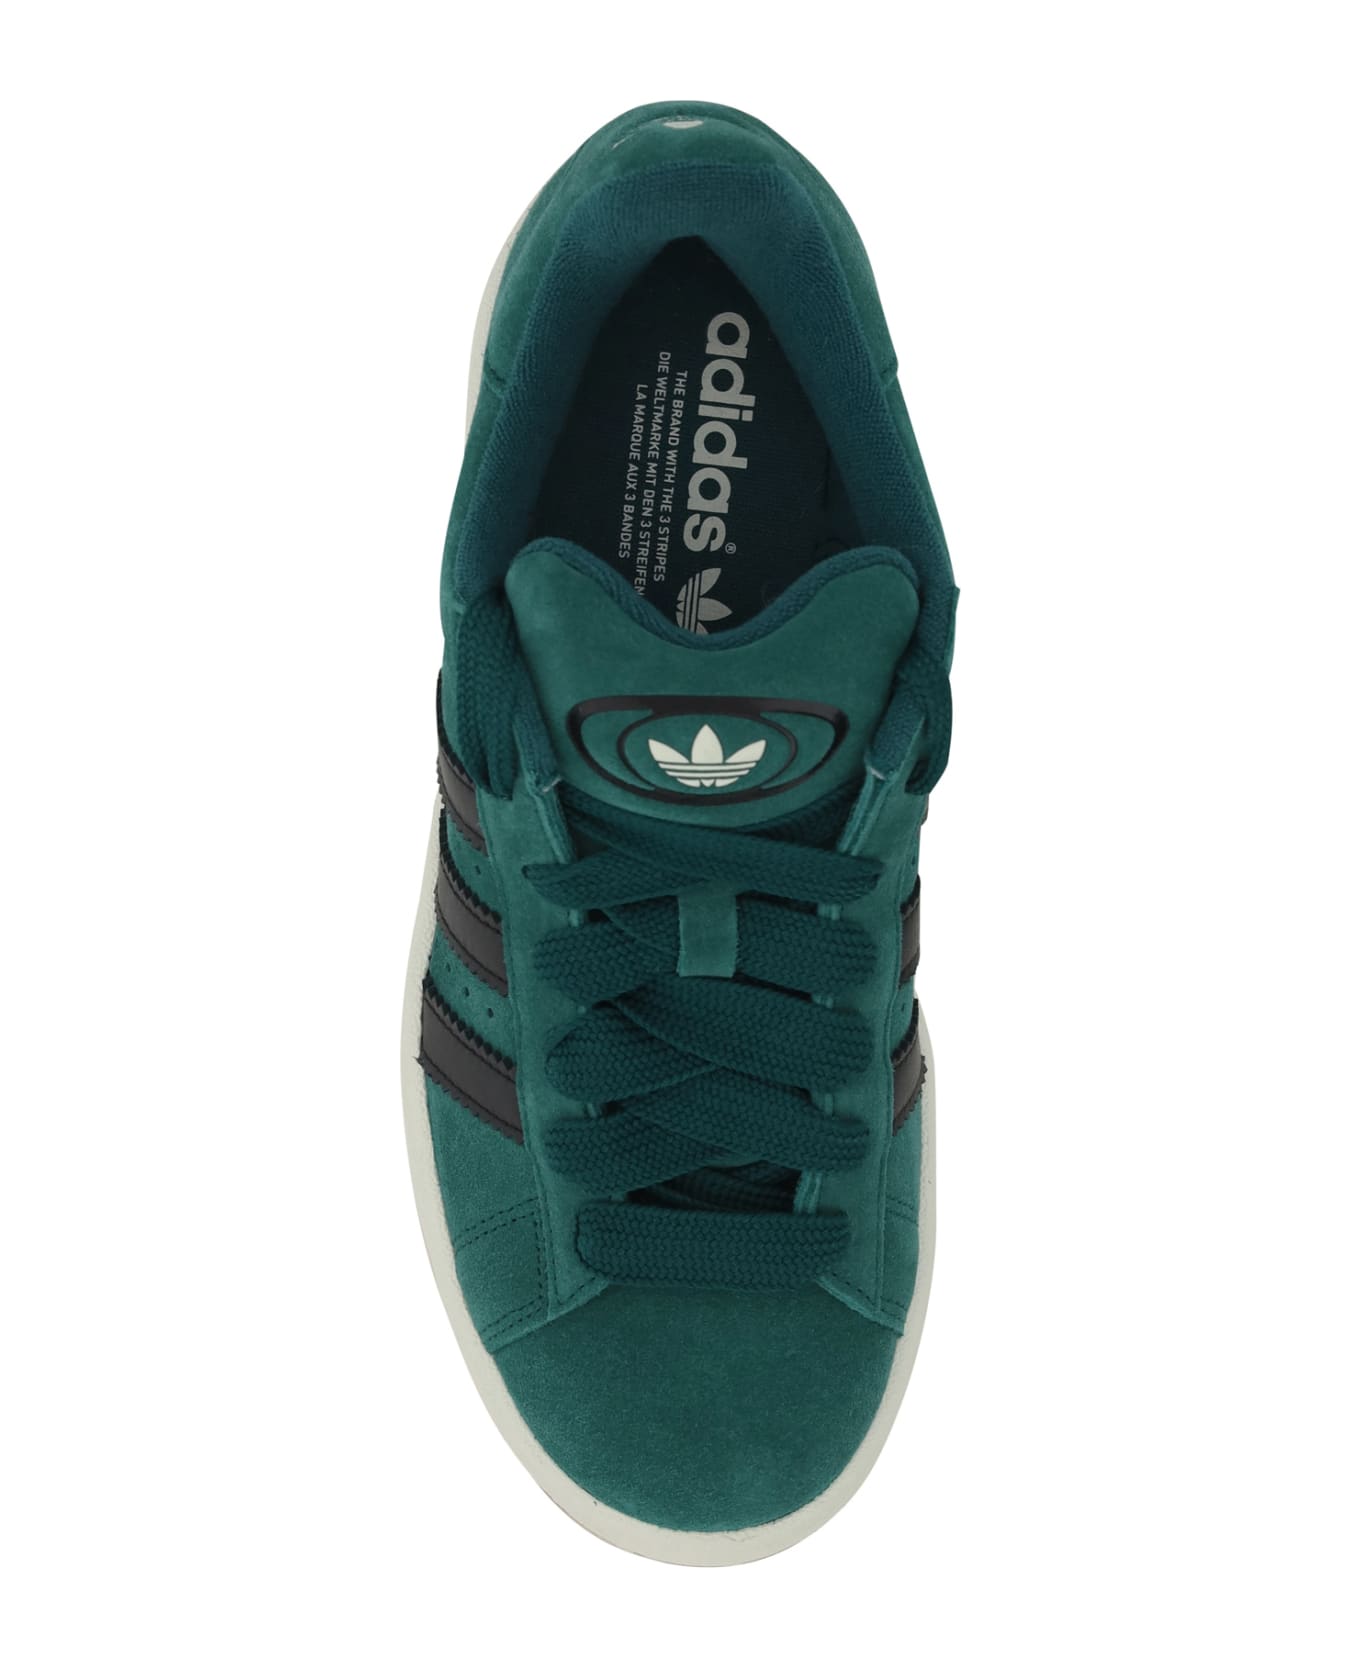 Adidas Campus Sneakers - Cgreen/cblack/owhite